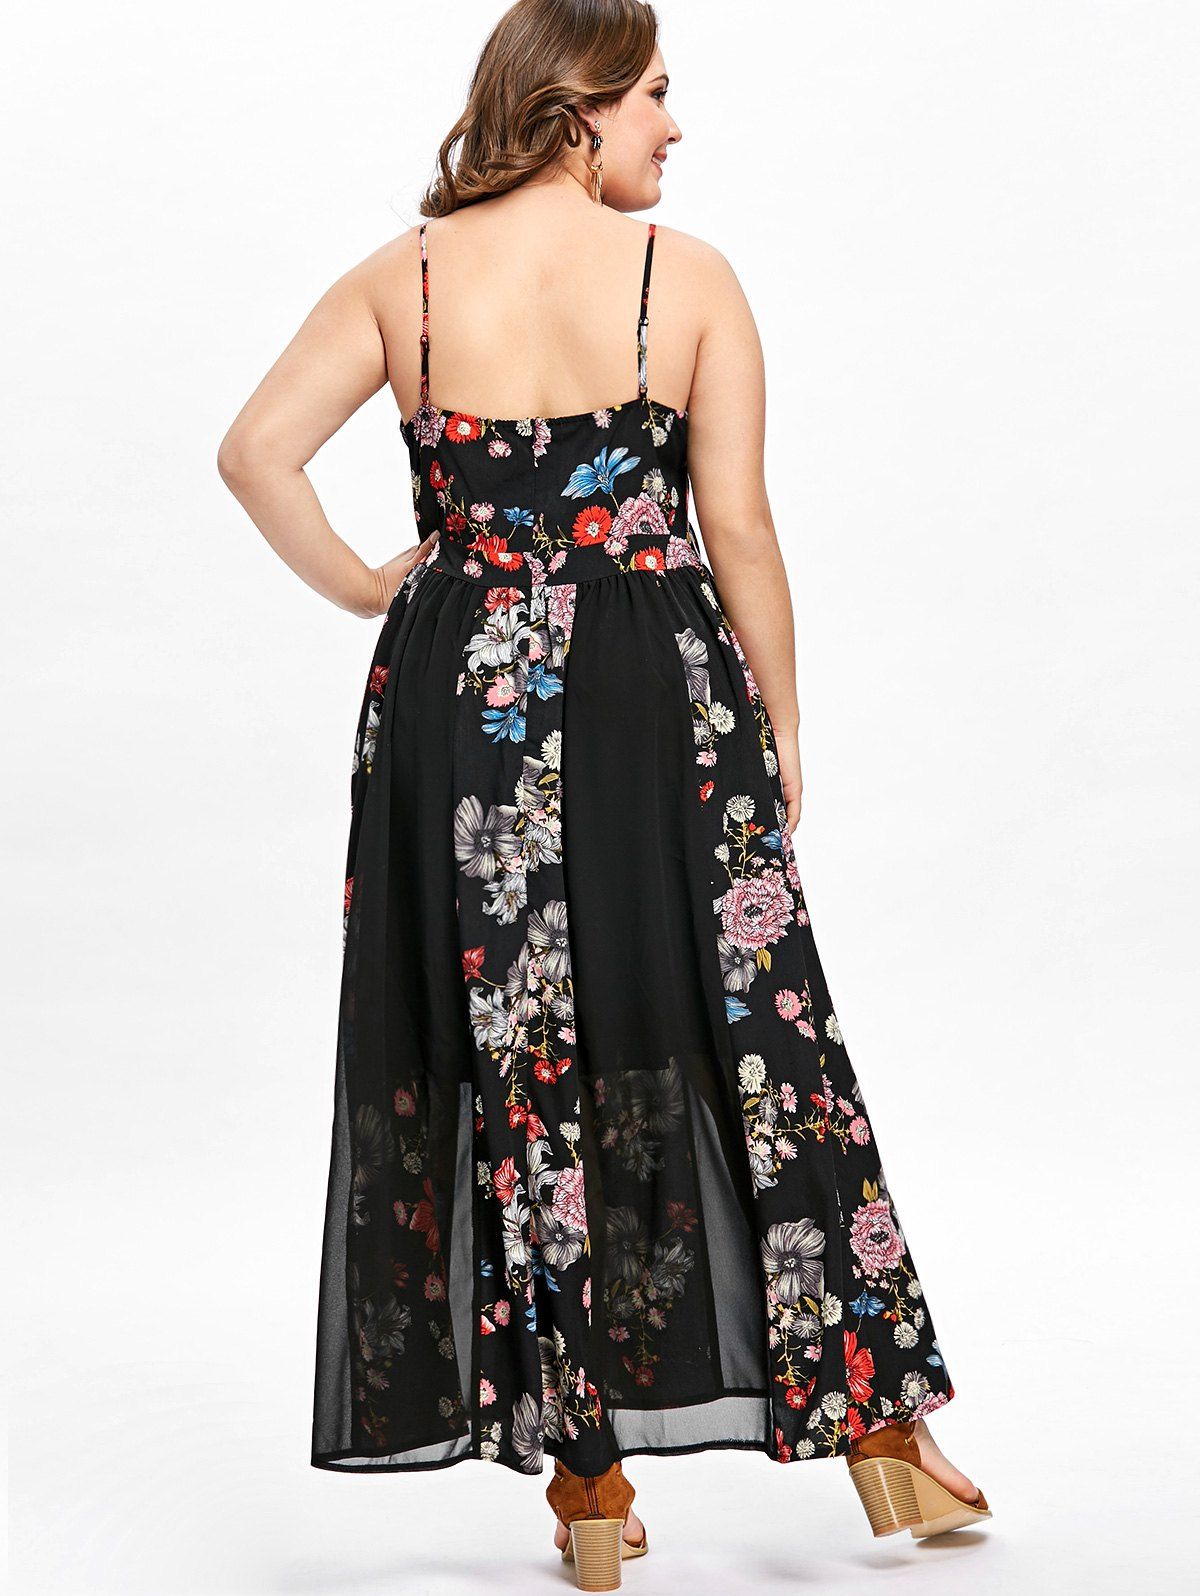 2018 Plus Size Bohemian Floral Flowy Slip Dress Black Xl In Plus Size Dresses Online Store Best 